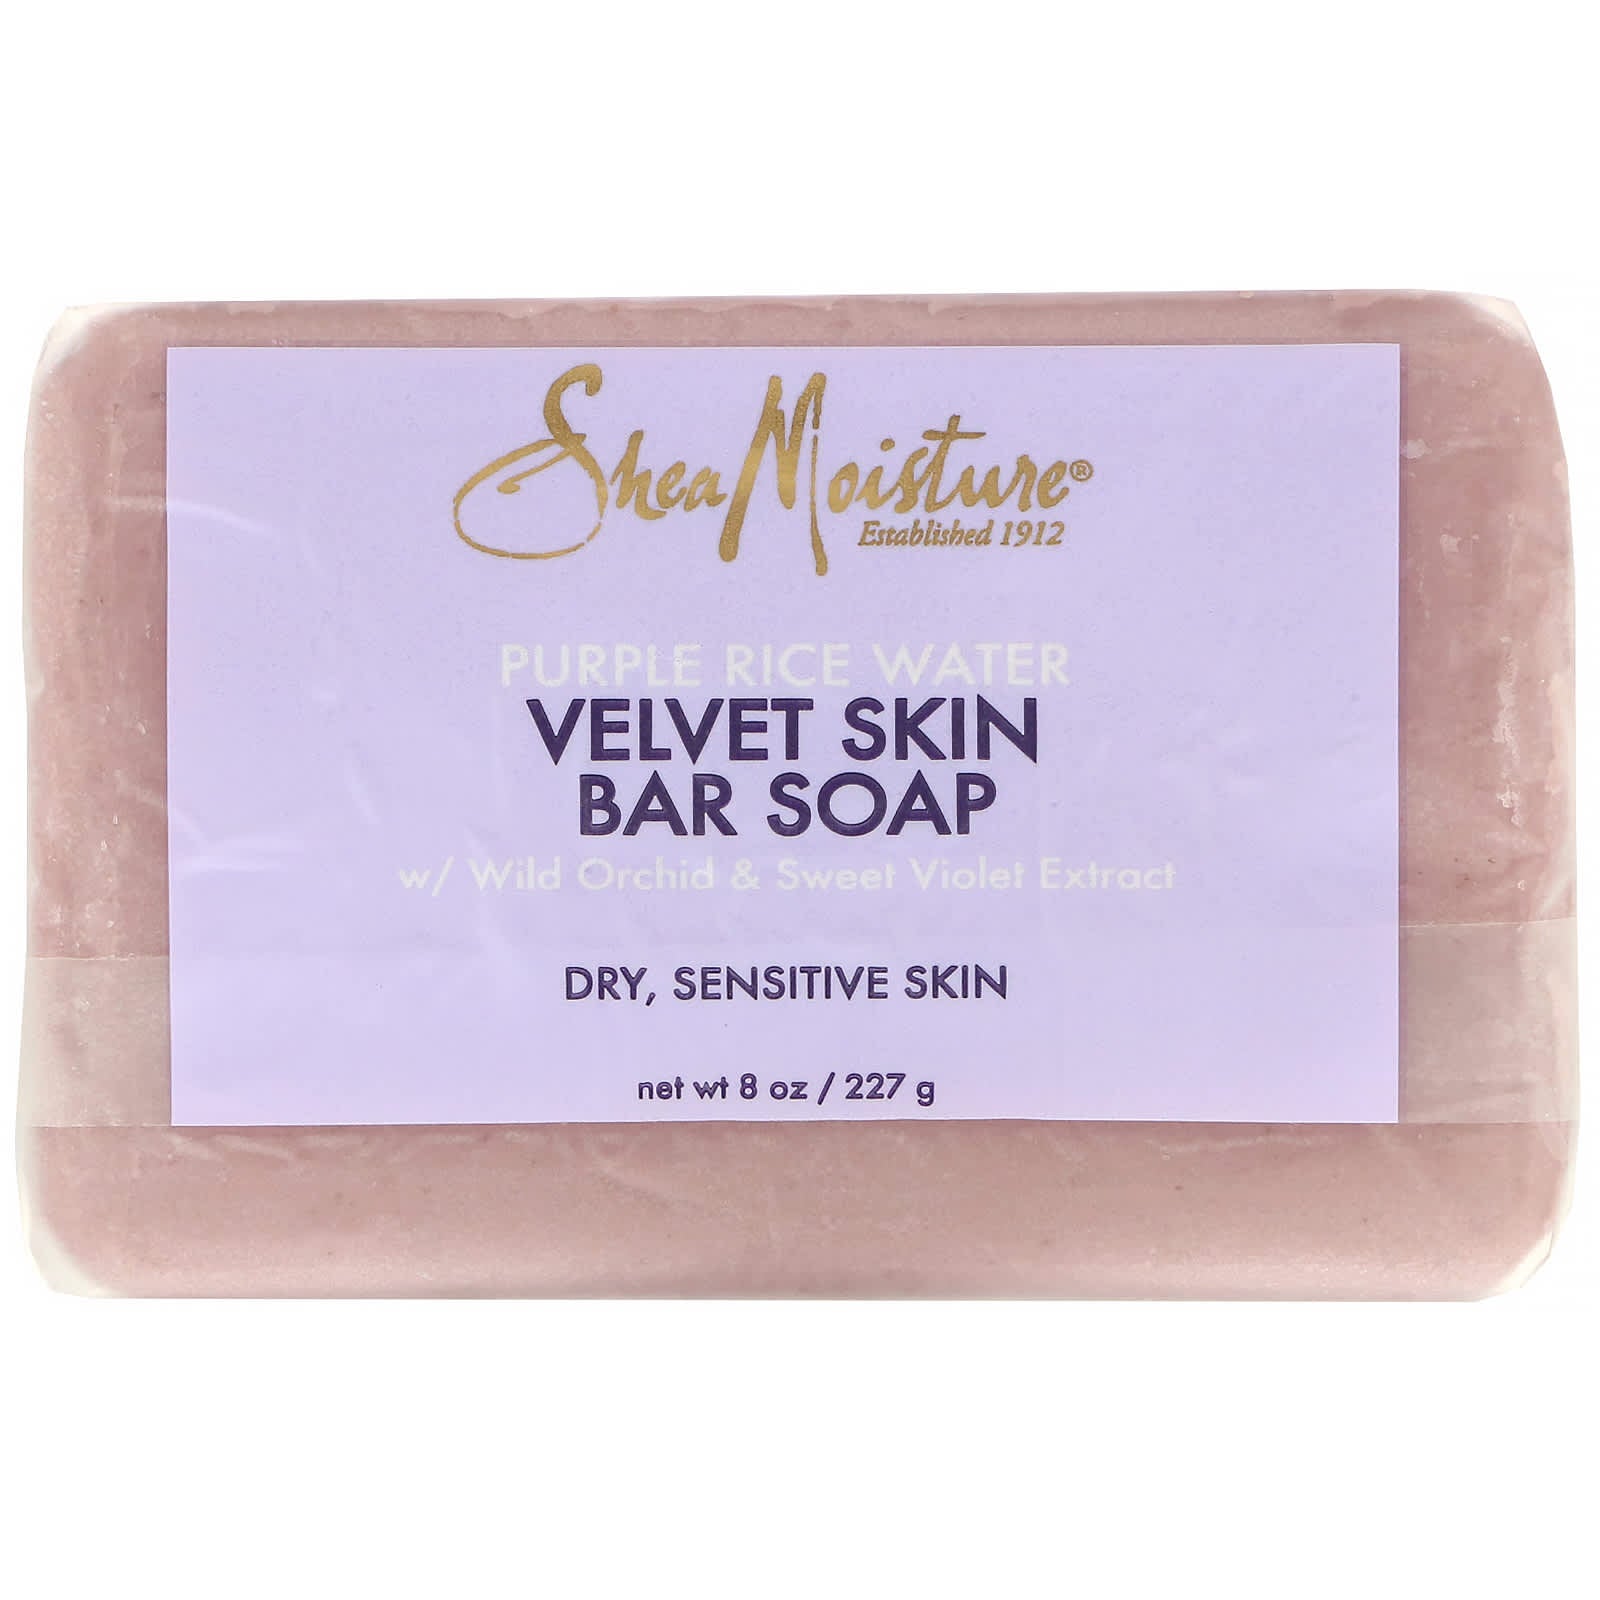 SheaMoisture, Purple Rice Water, Velvet Skin Bar Soap (227 g)